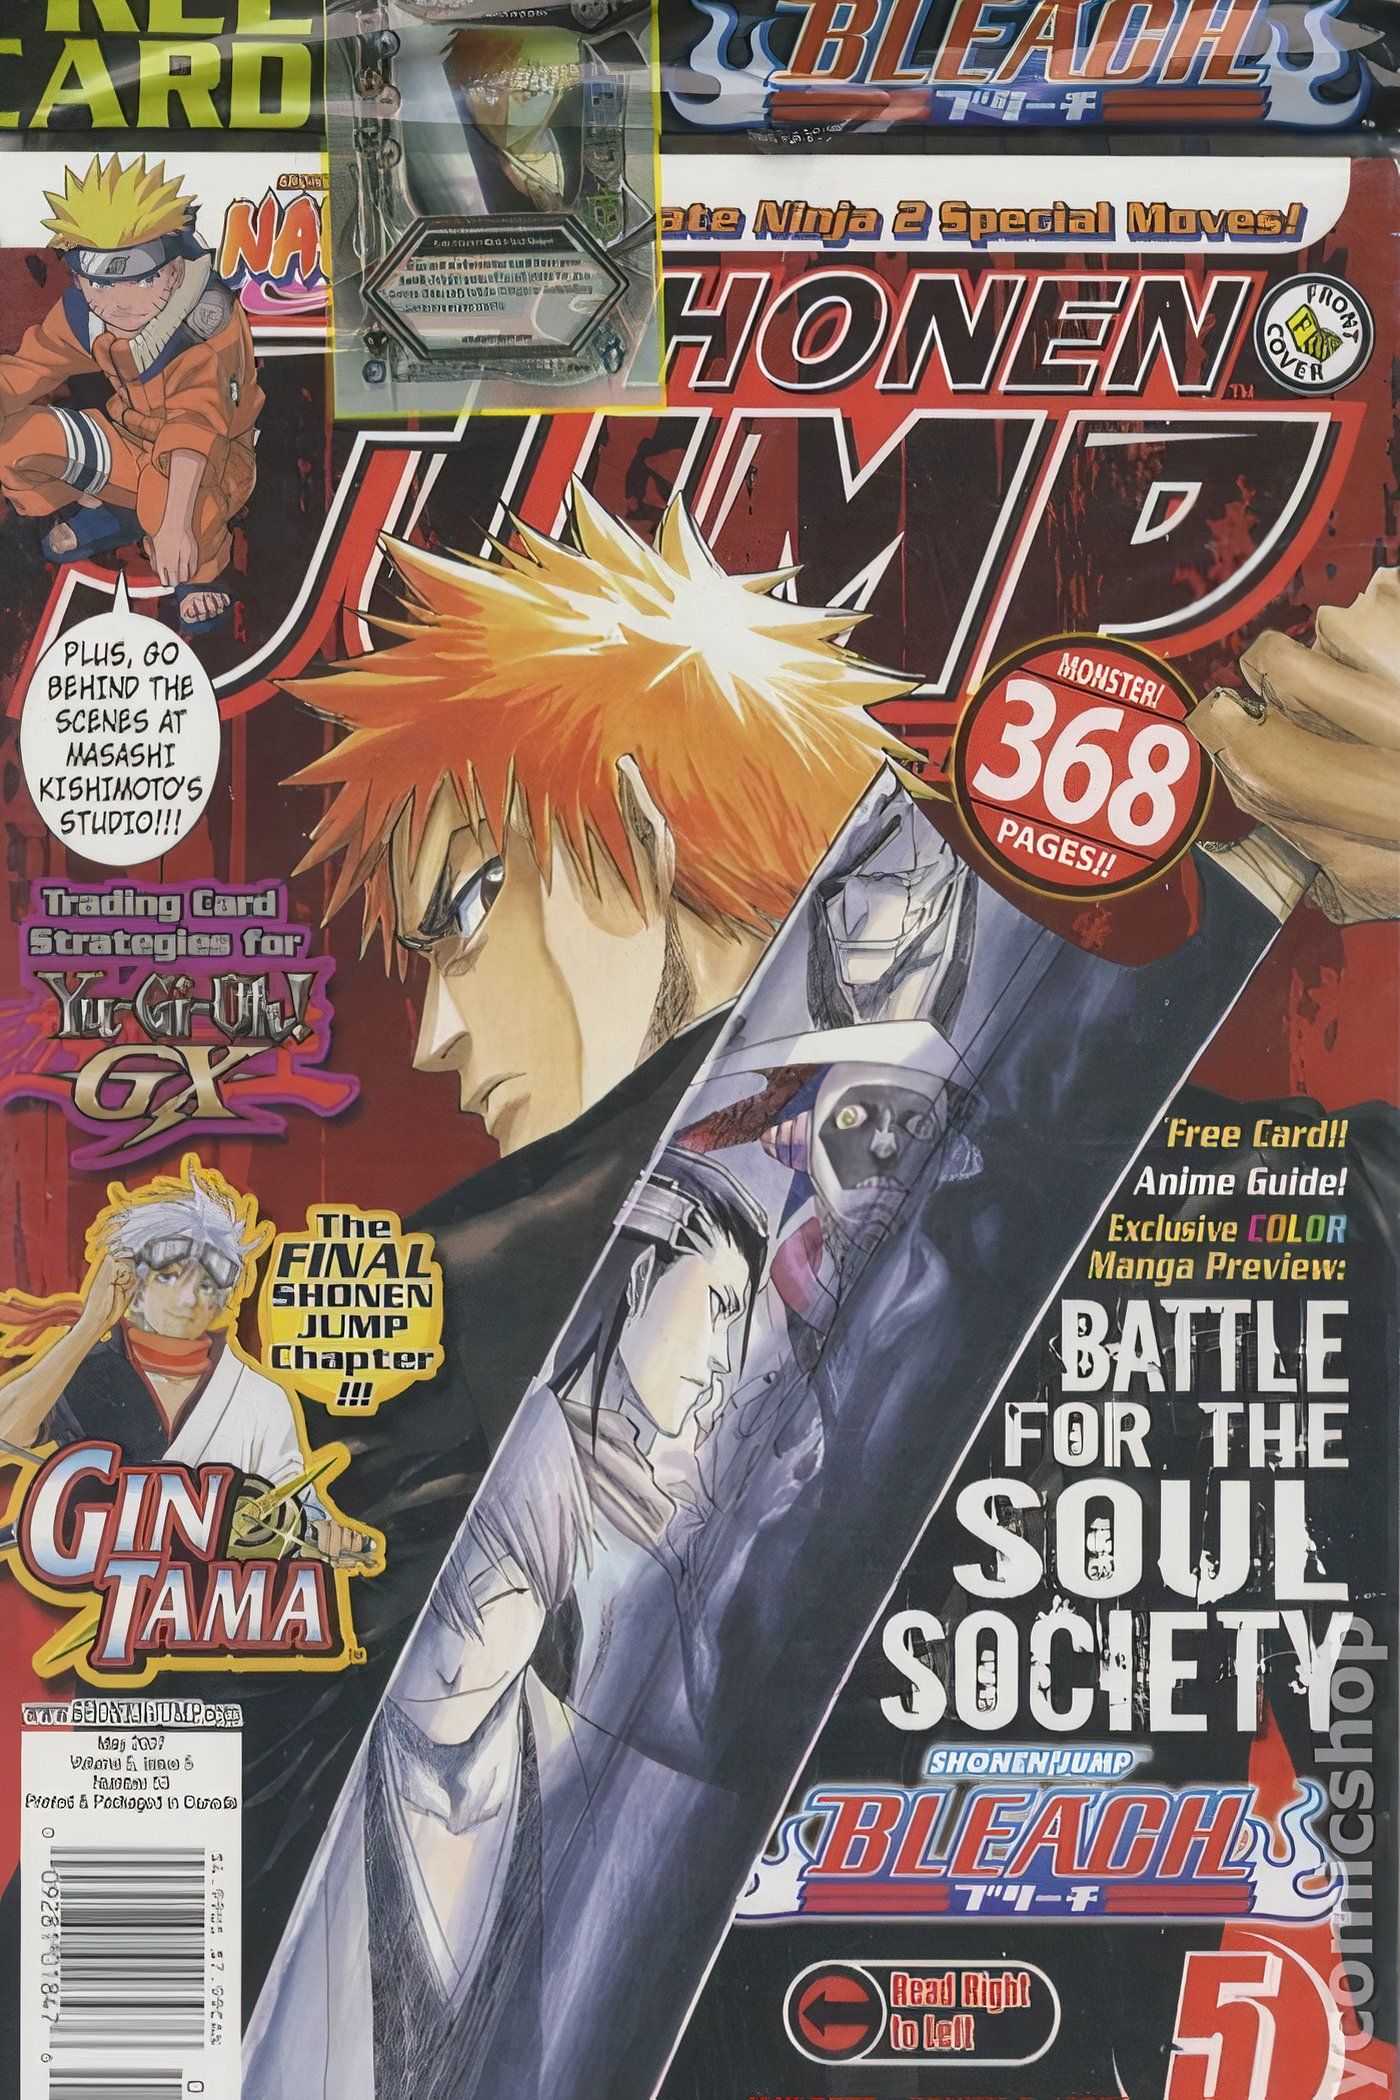 American Weekly Shonen Jump 53 featuring Ichigo from Bleach